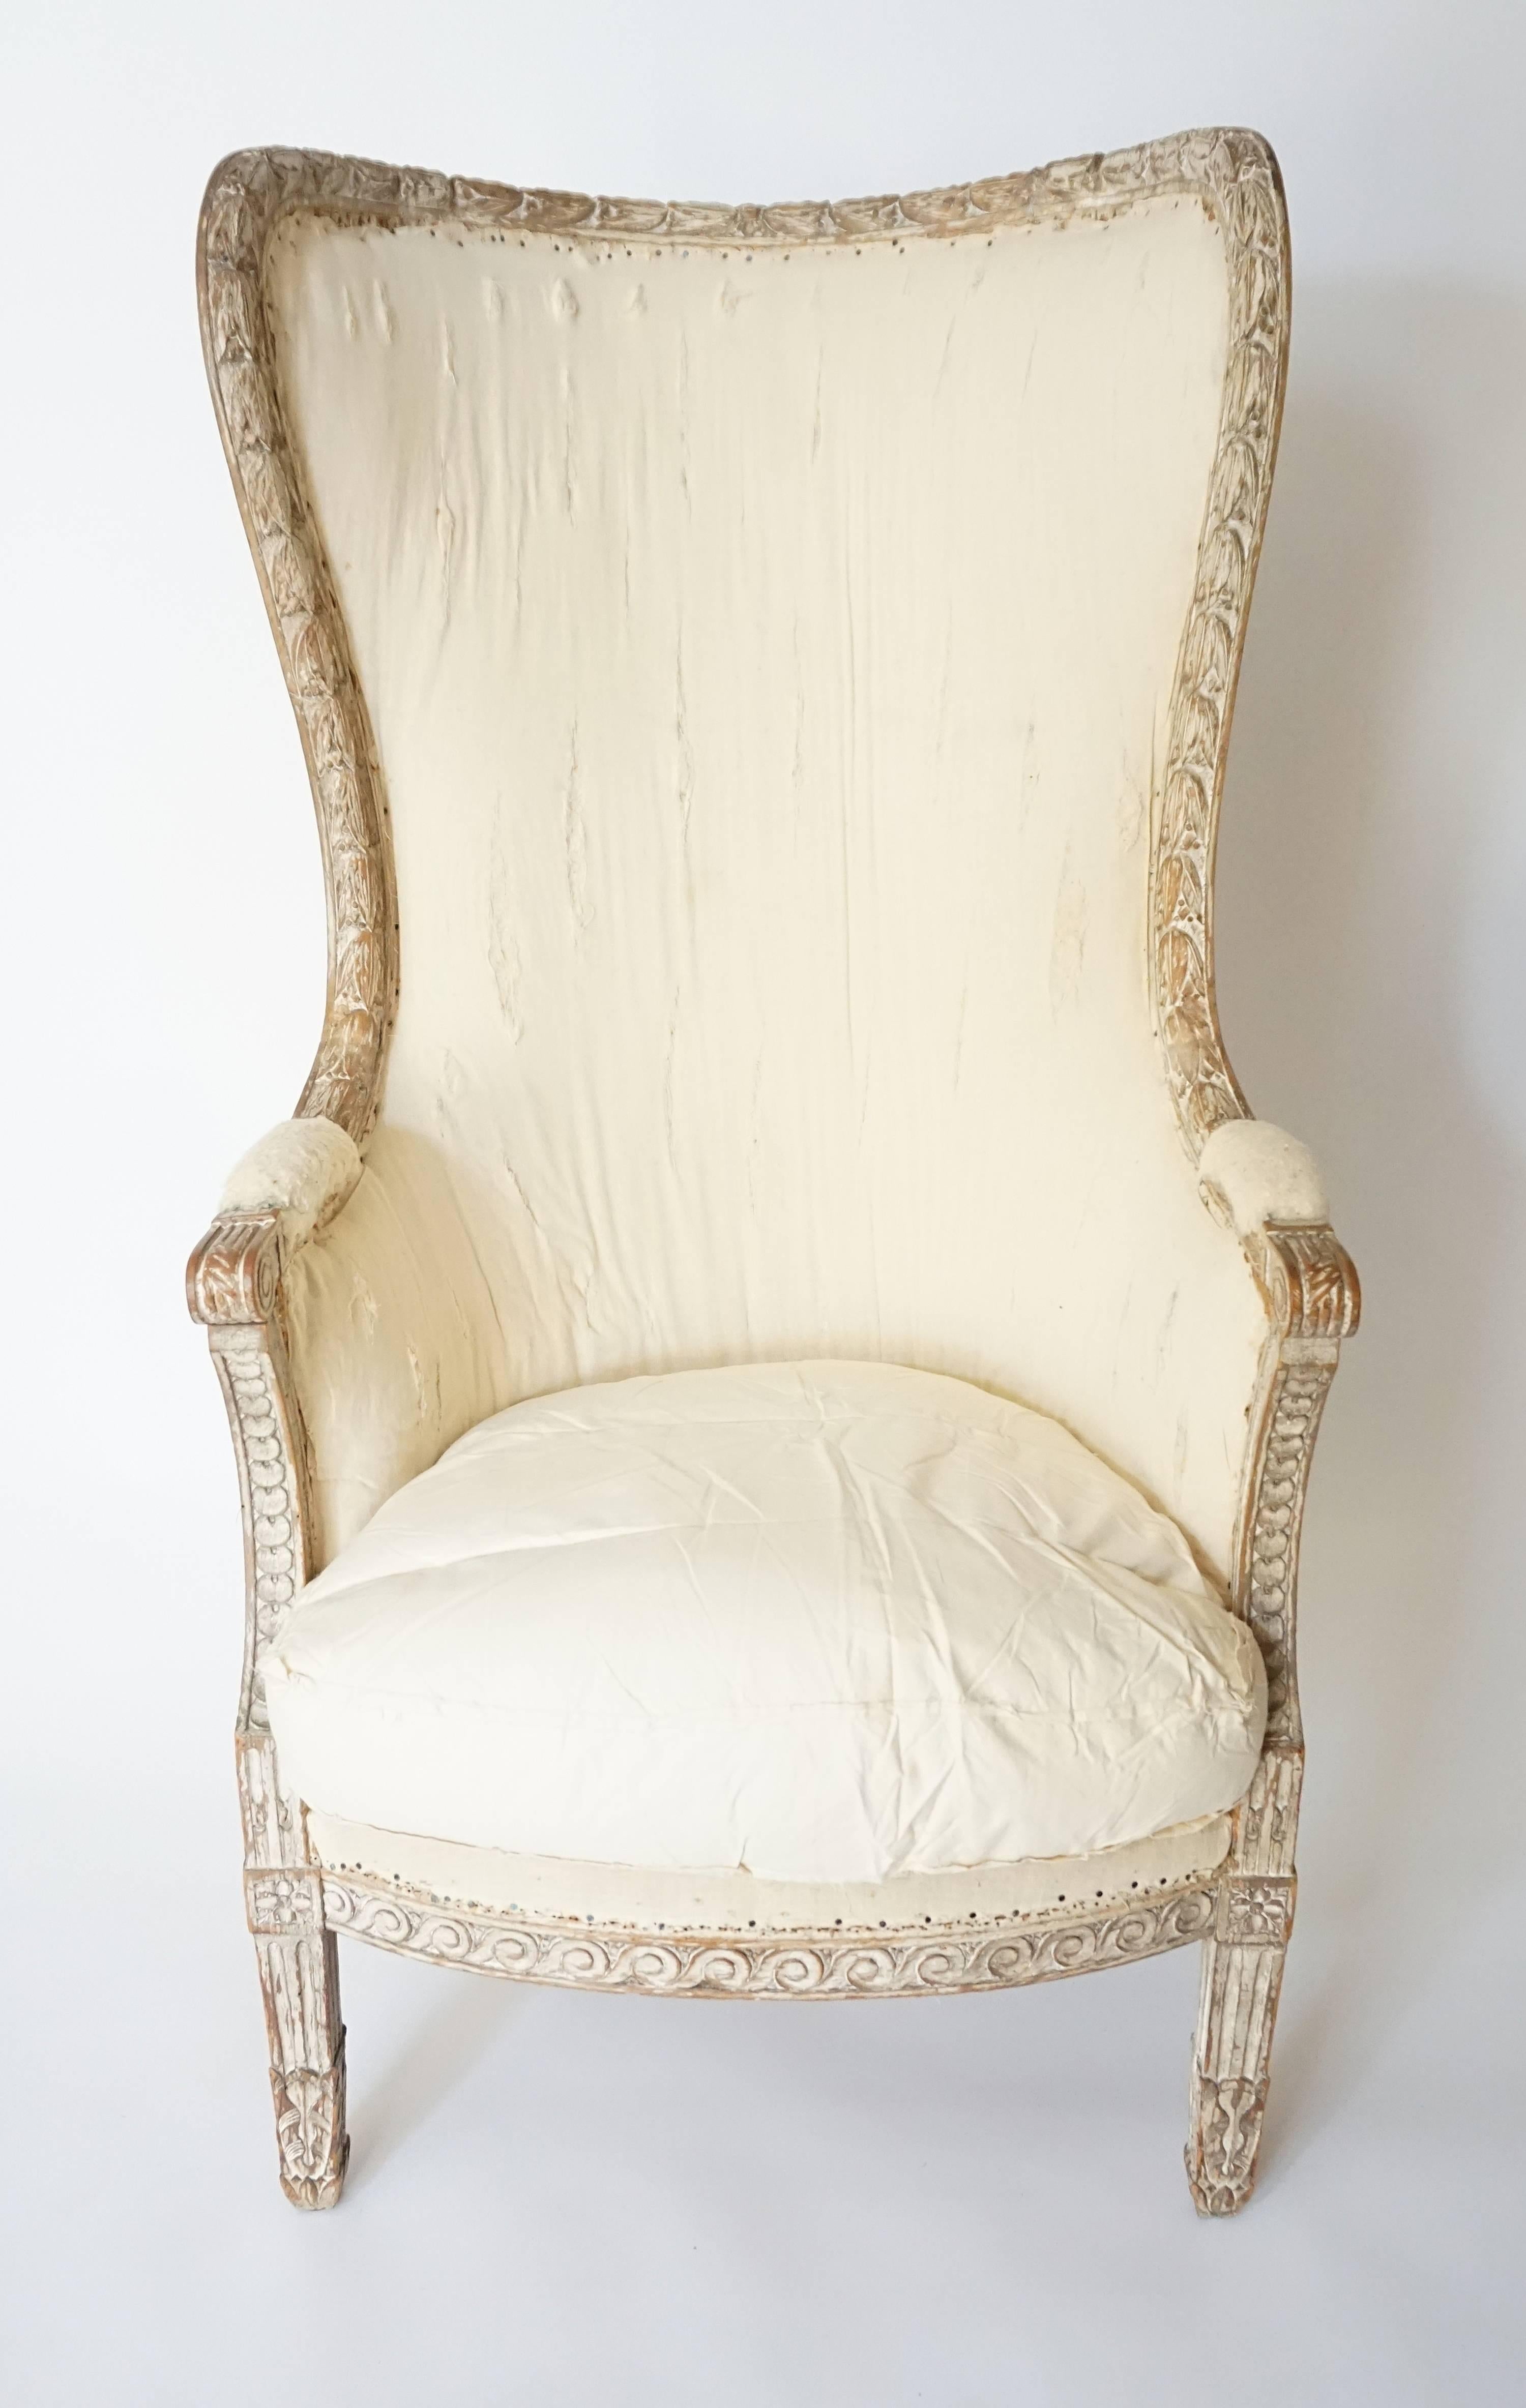 French Louis XVI Bergère à Oreilles or Wingback Chair, France, circa 1770